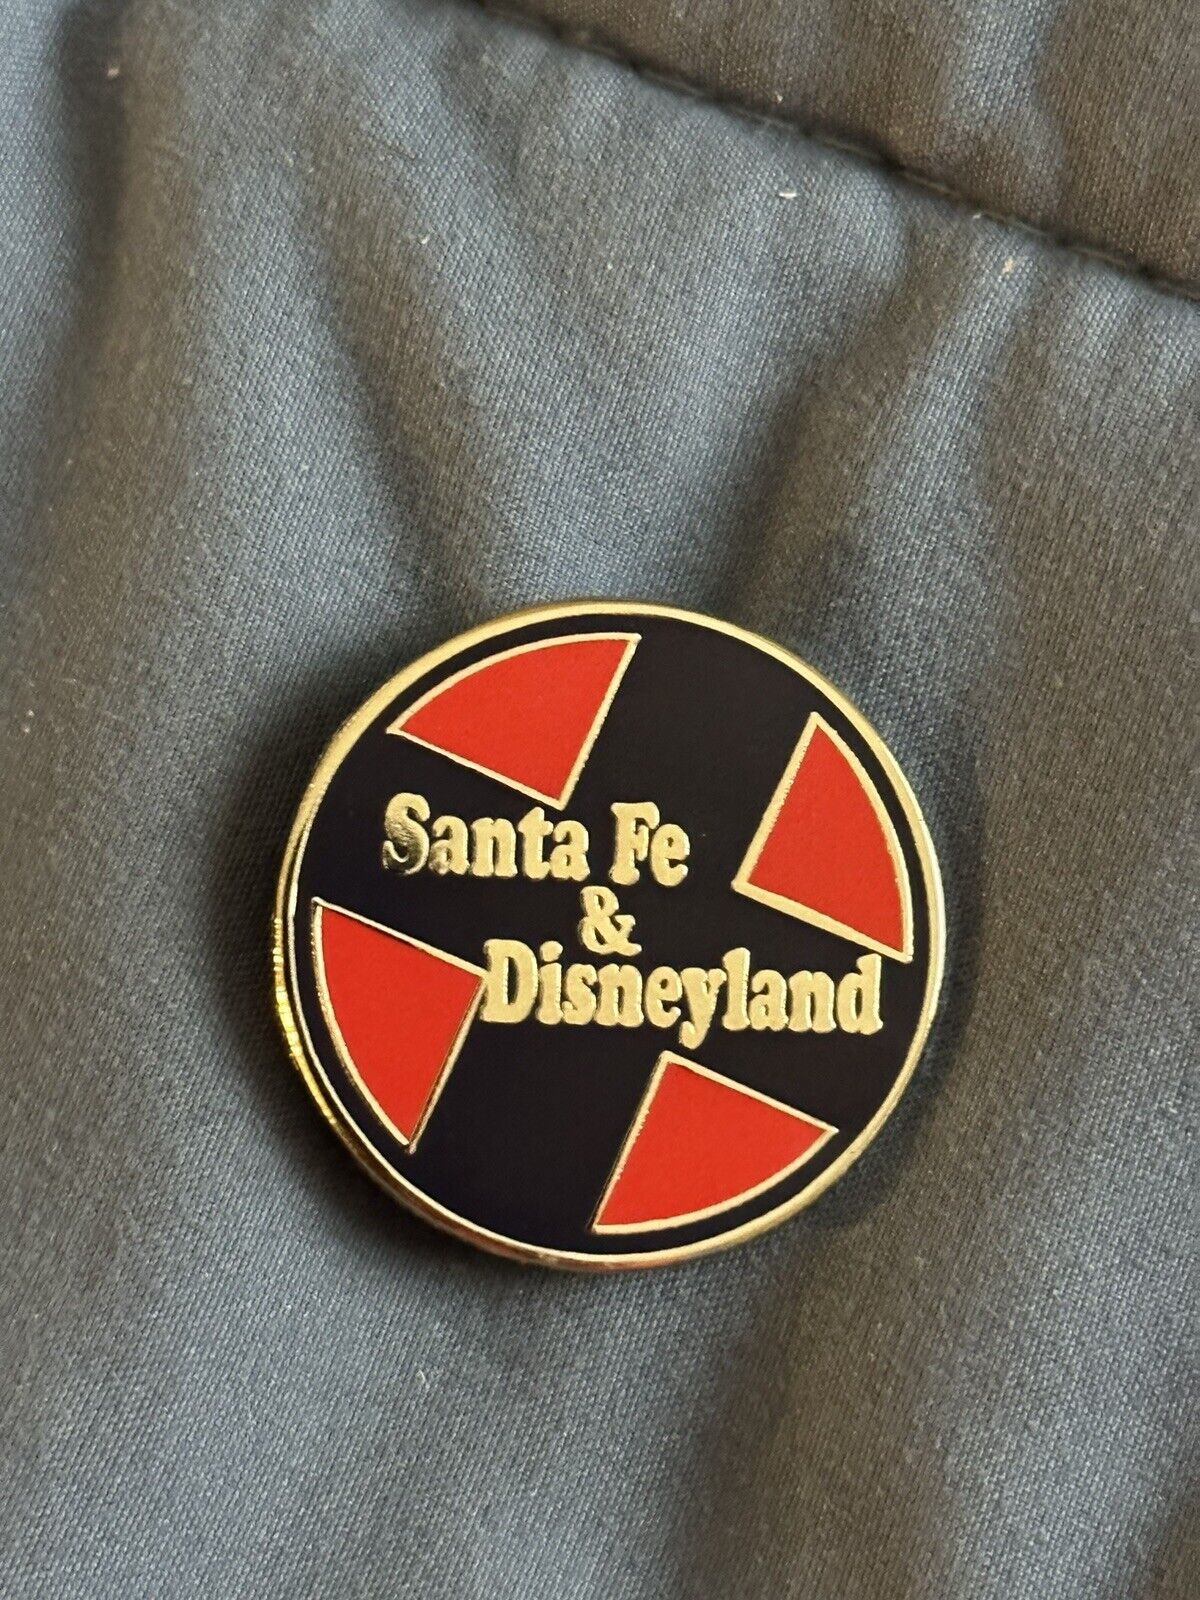 Disneyland And Santa Fe Railroad Pin